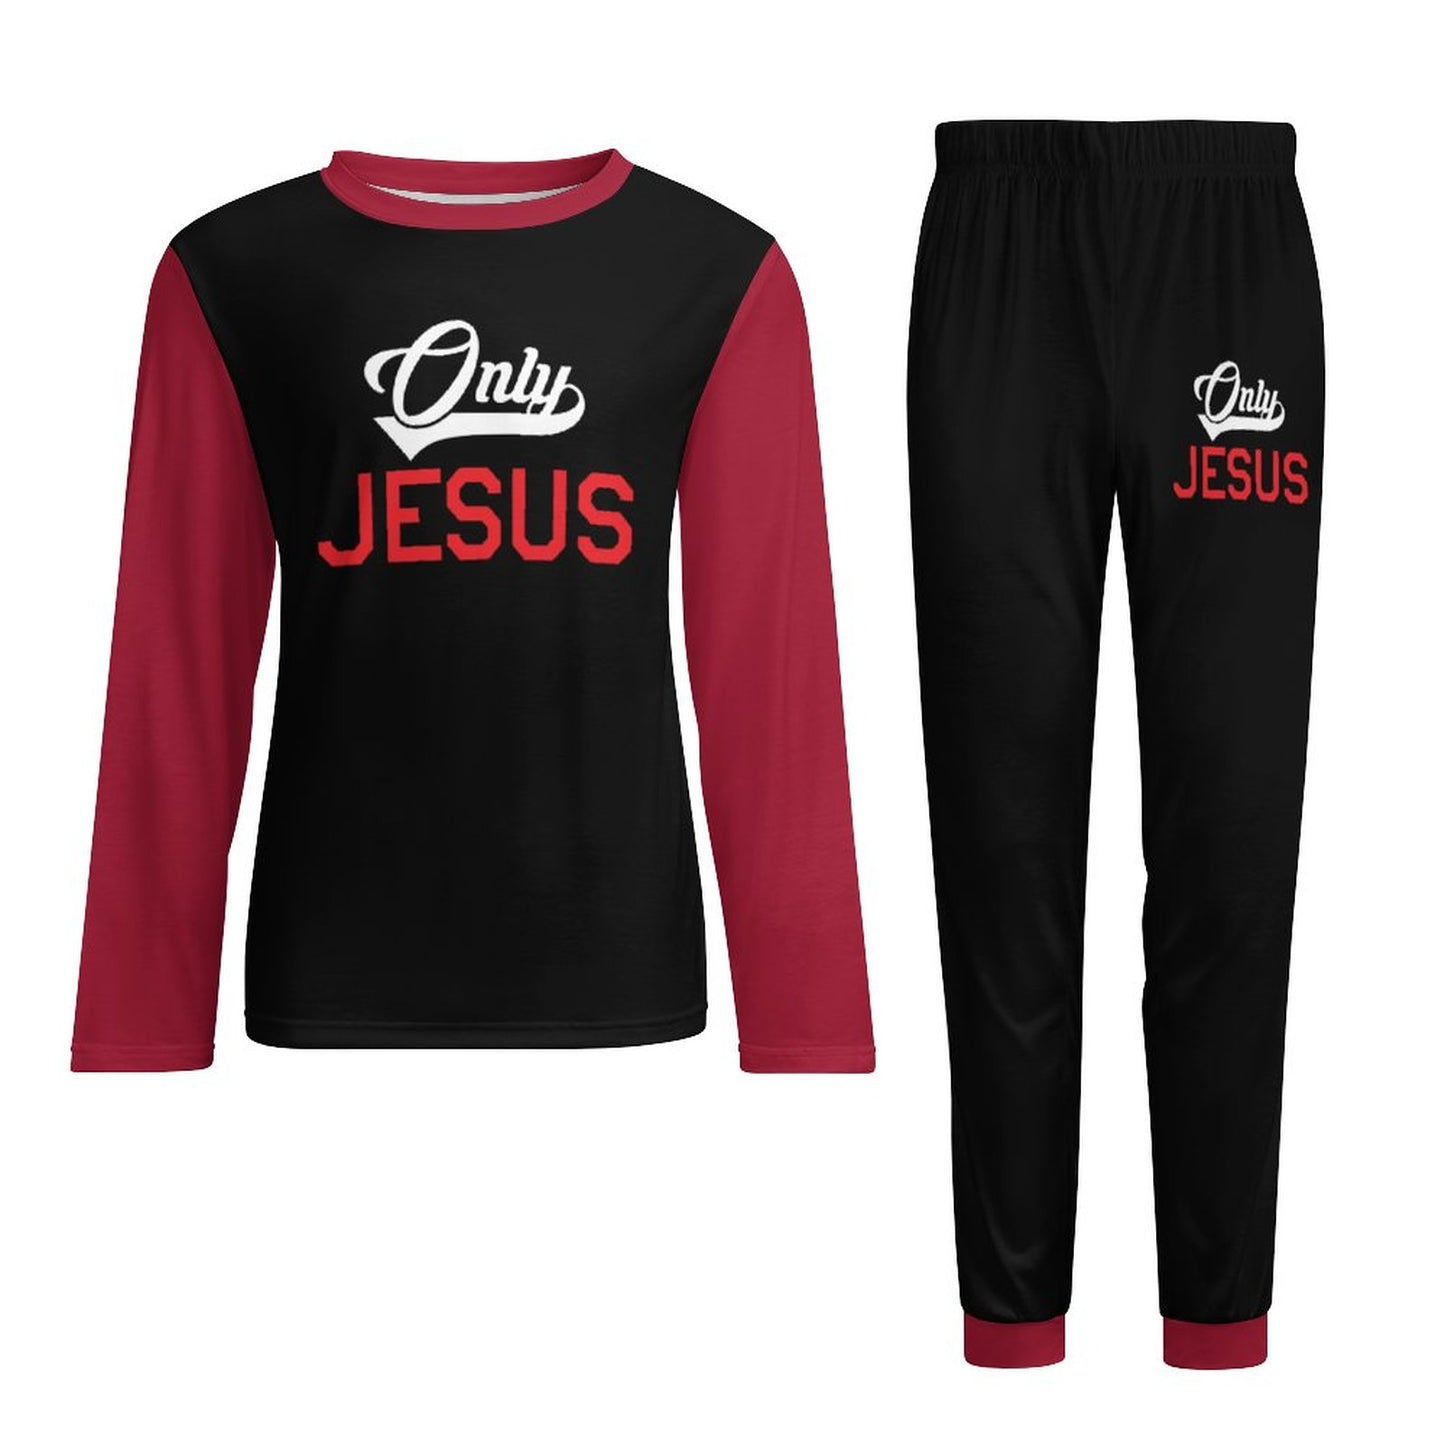 Only Jesus Men's Christian Pajamas SALE-Personal Design